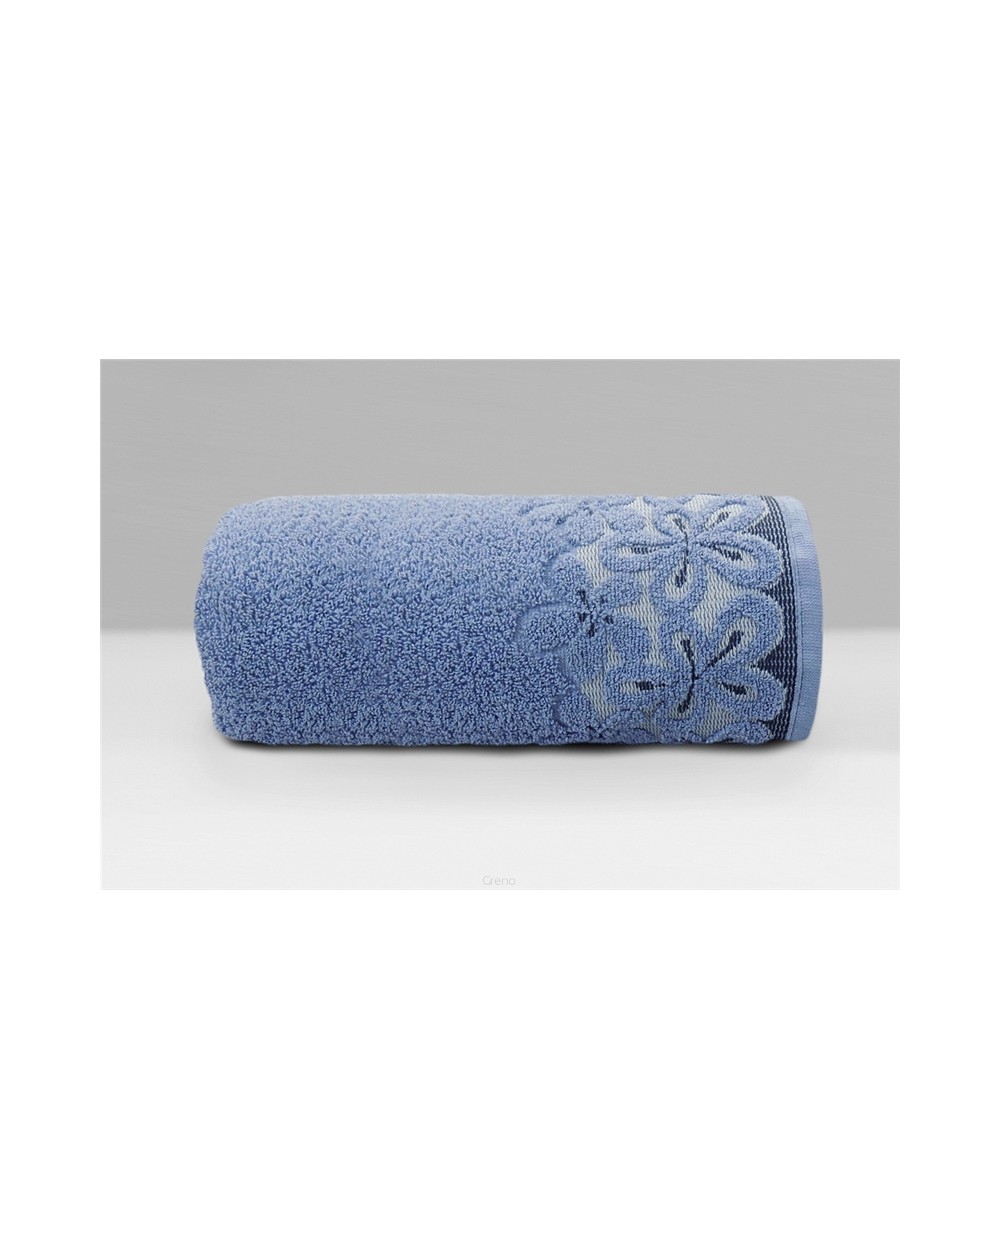 Ręcznik Bella mikrobawełna 50x90 denim